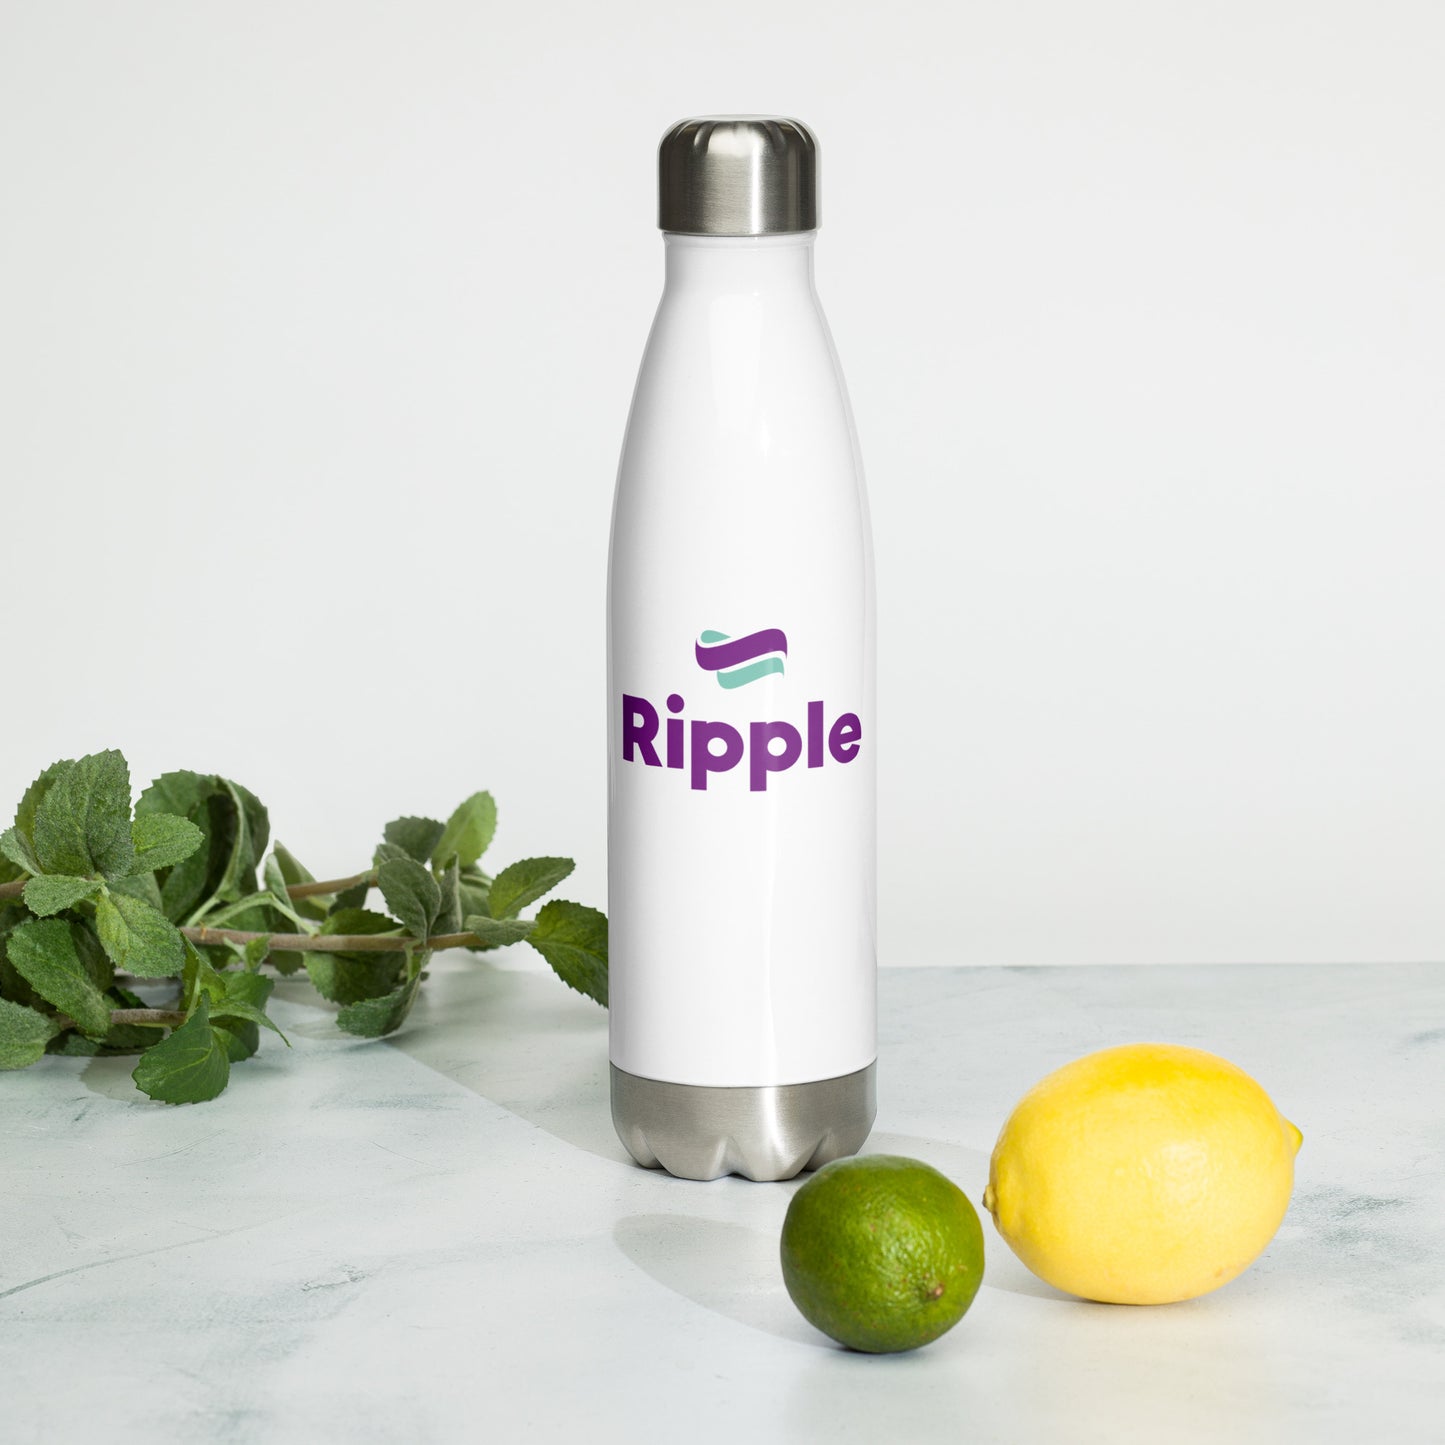 Ripple stainless steel water bottle